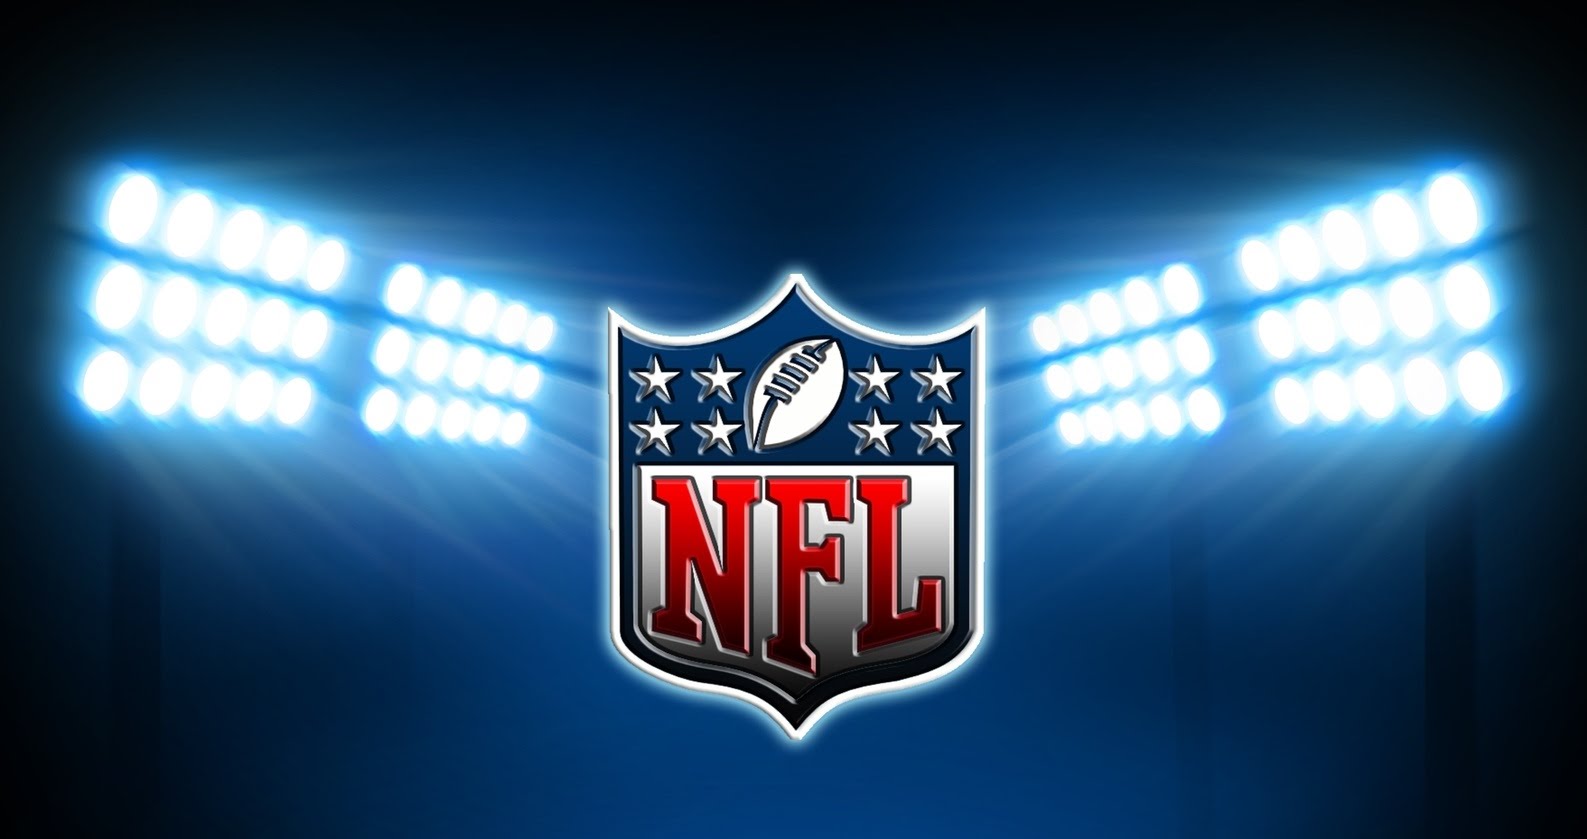 NFL Offseason Dates: When Does NFL Free Agency Start 2022